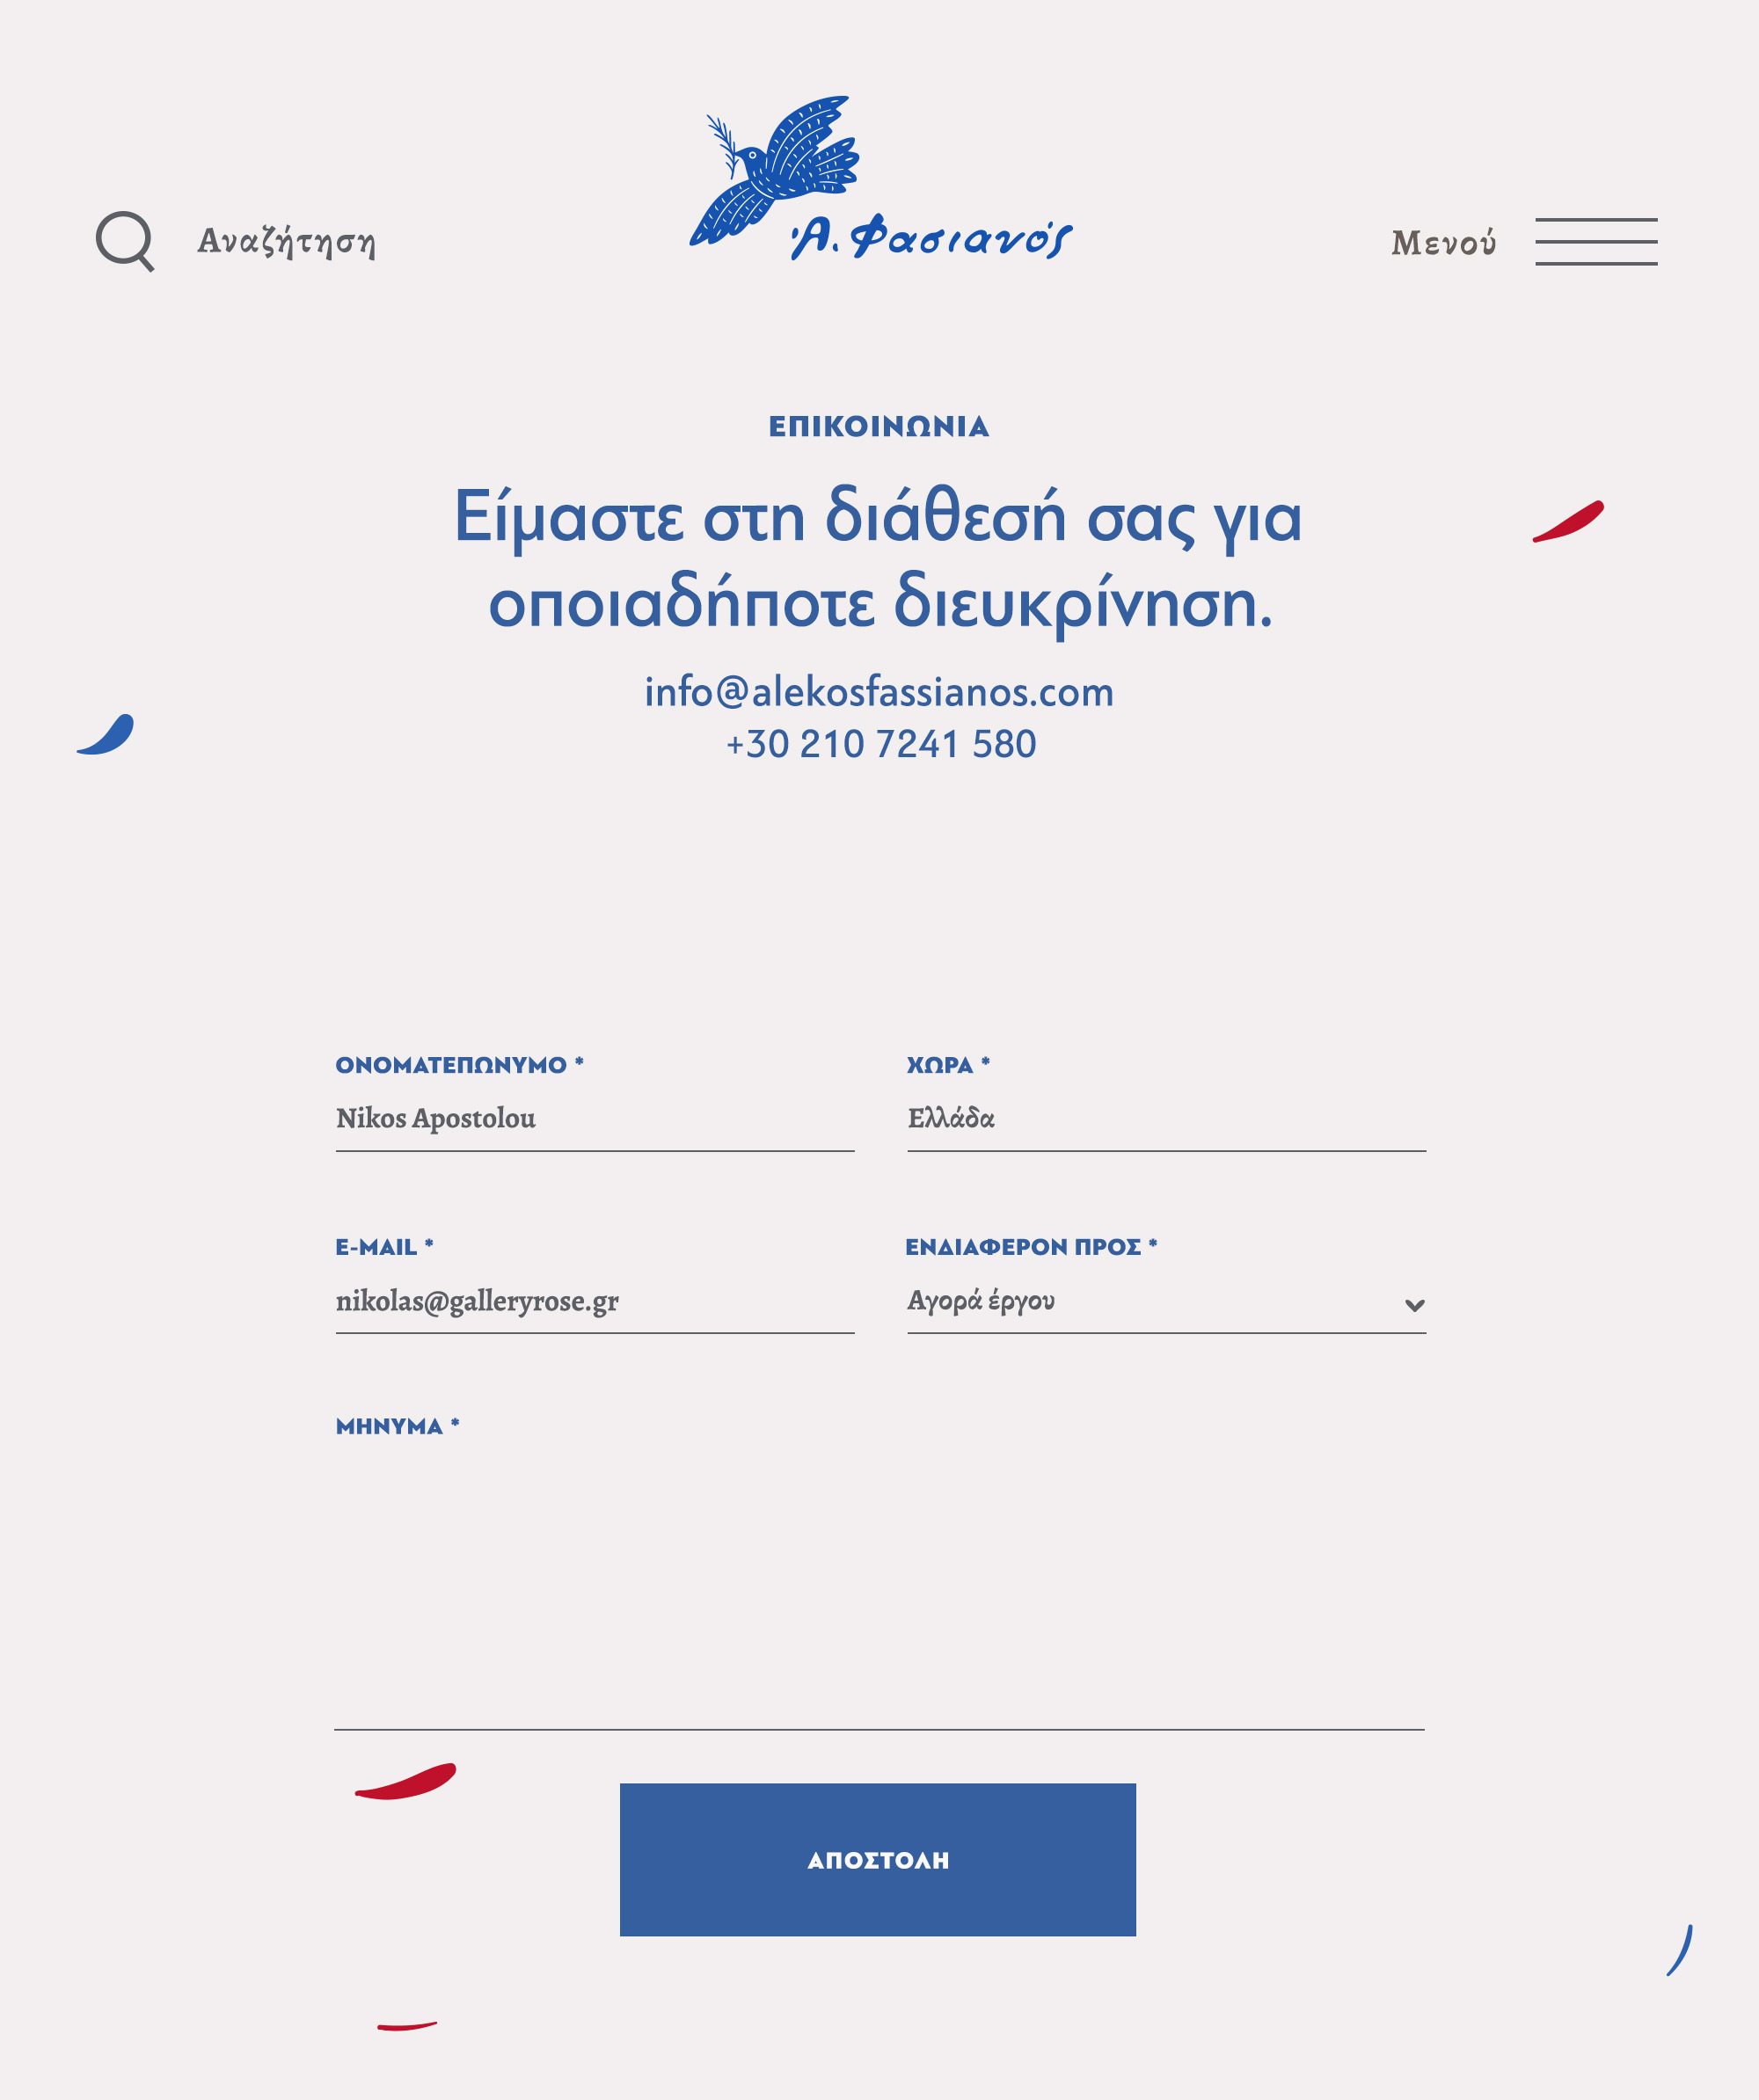 alekos fassianos website design contact kommigraphics